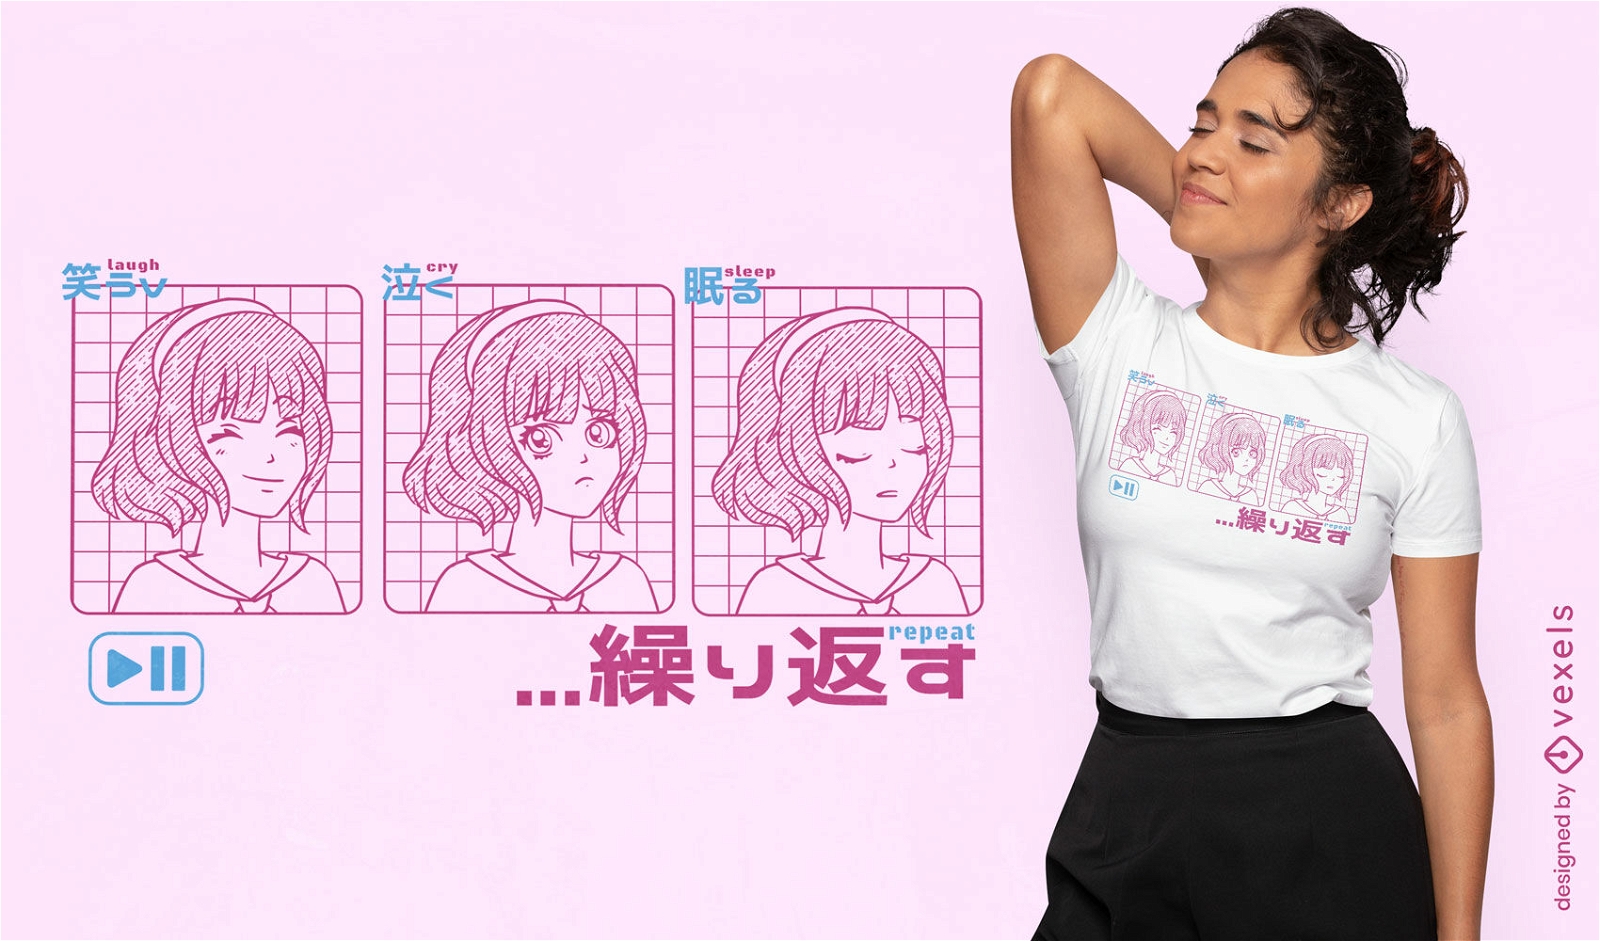 Laugh cry sleep anime girl dise?o de camiseta